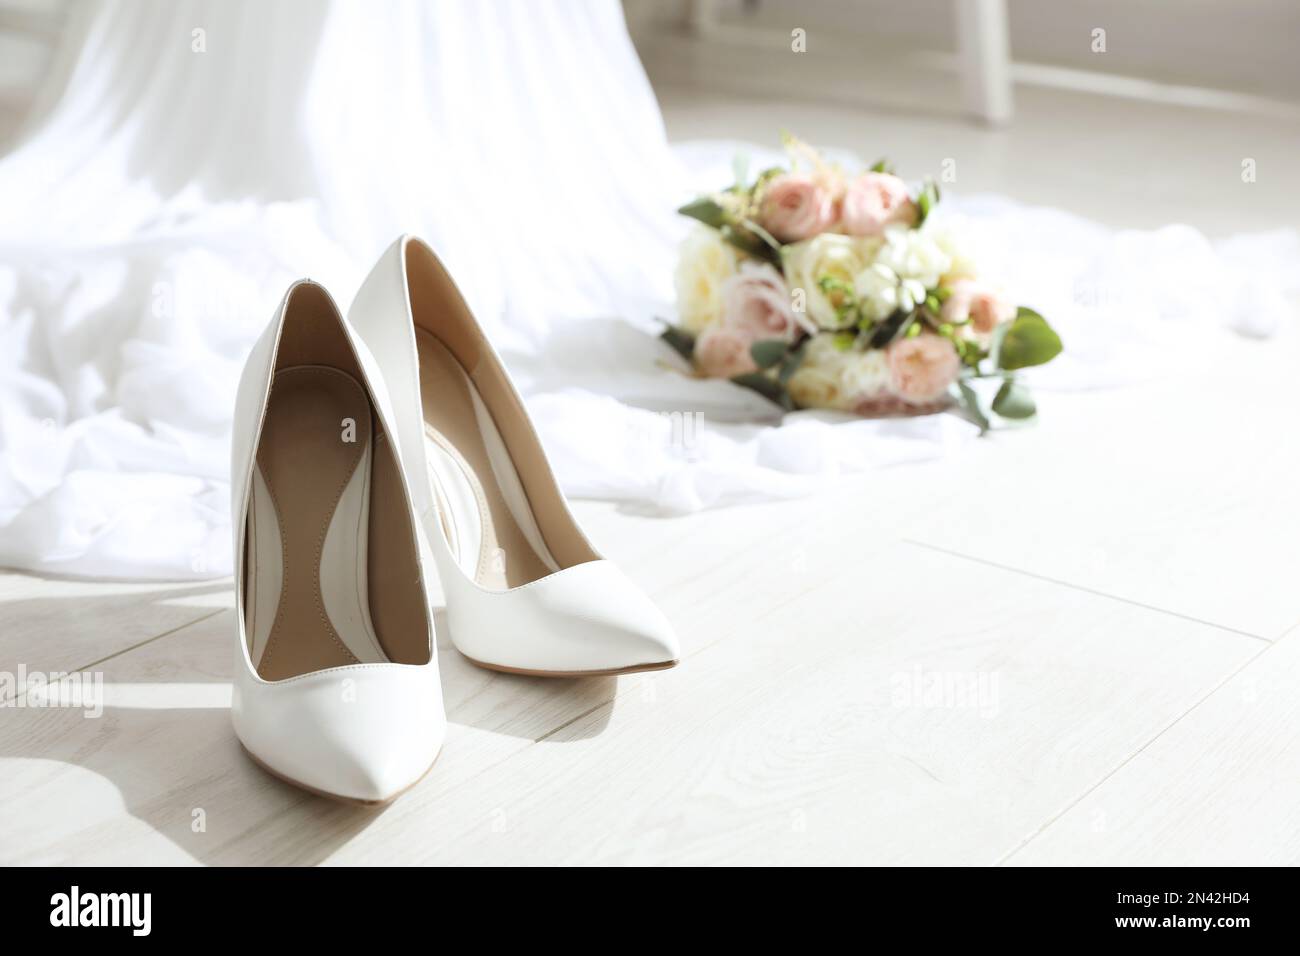 Pair of wedding high heel shoes on white wooden floor indoors Stock Photo